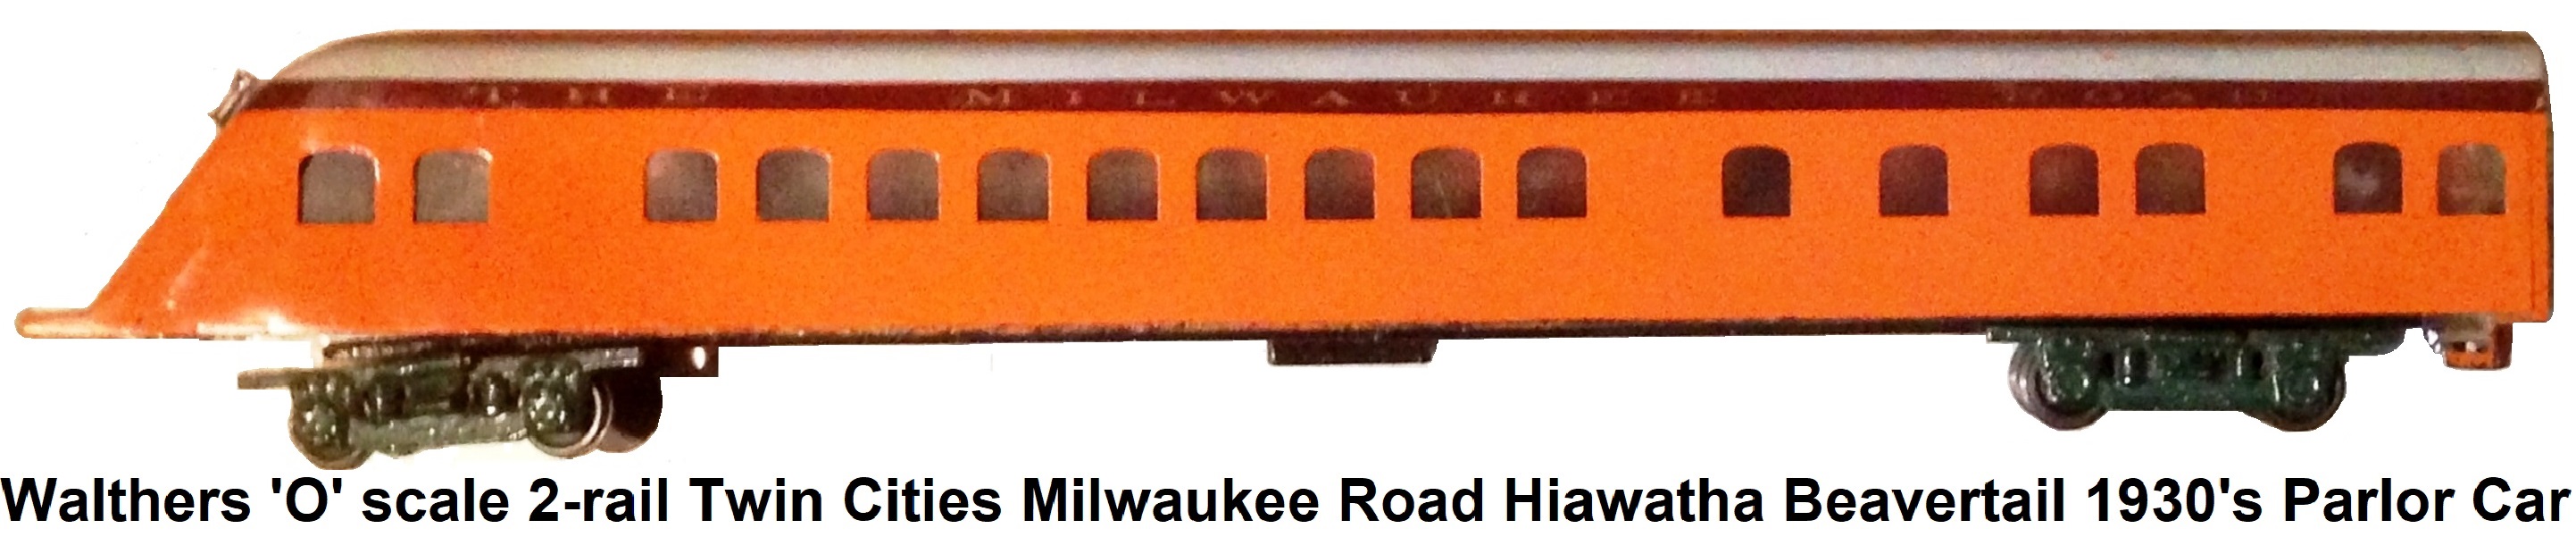 Walthers 'O' scale Twin Cities Milwaukee Road Hiawatha Parlor Car circa 1936